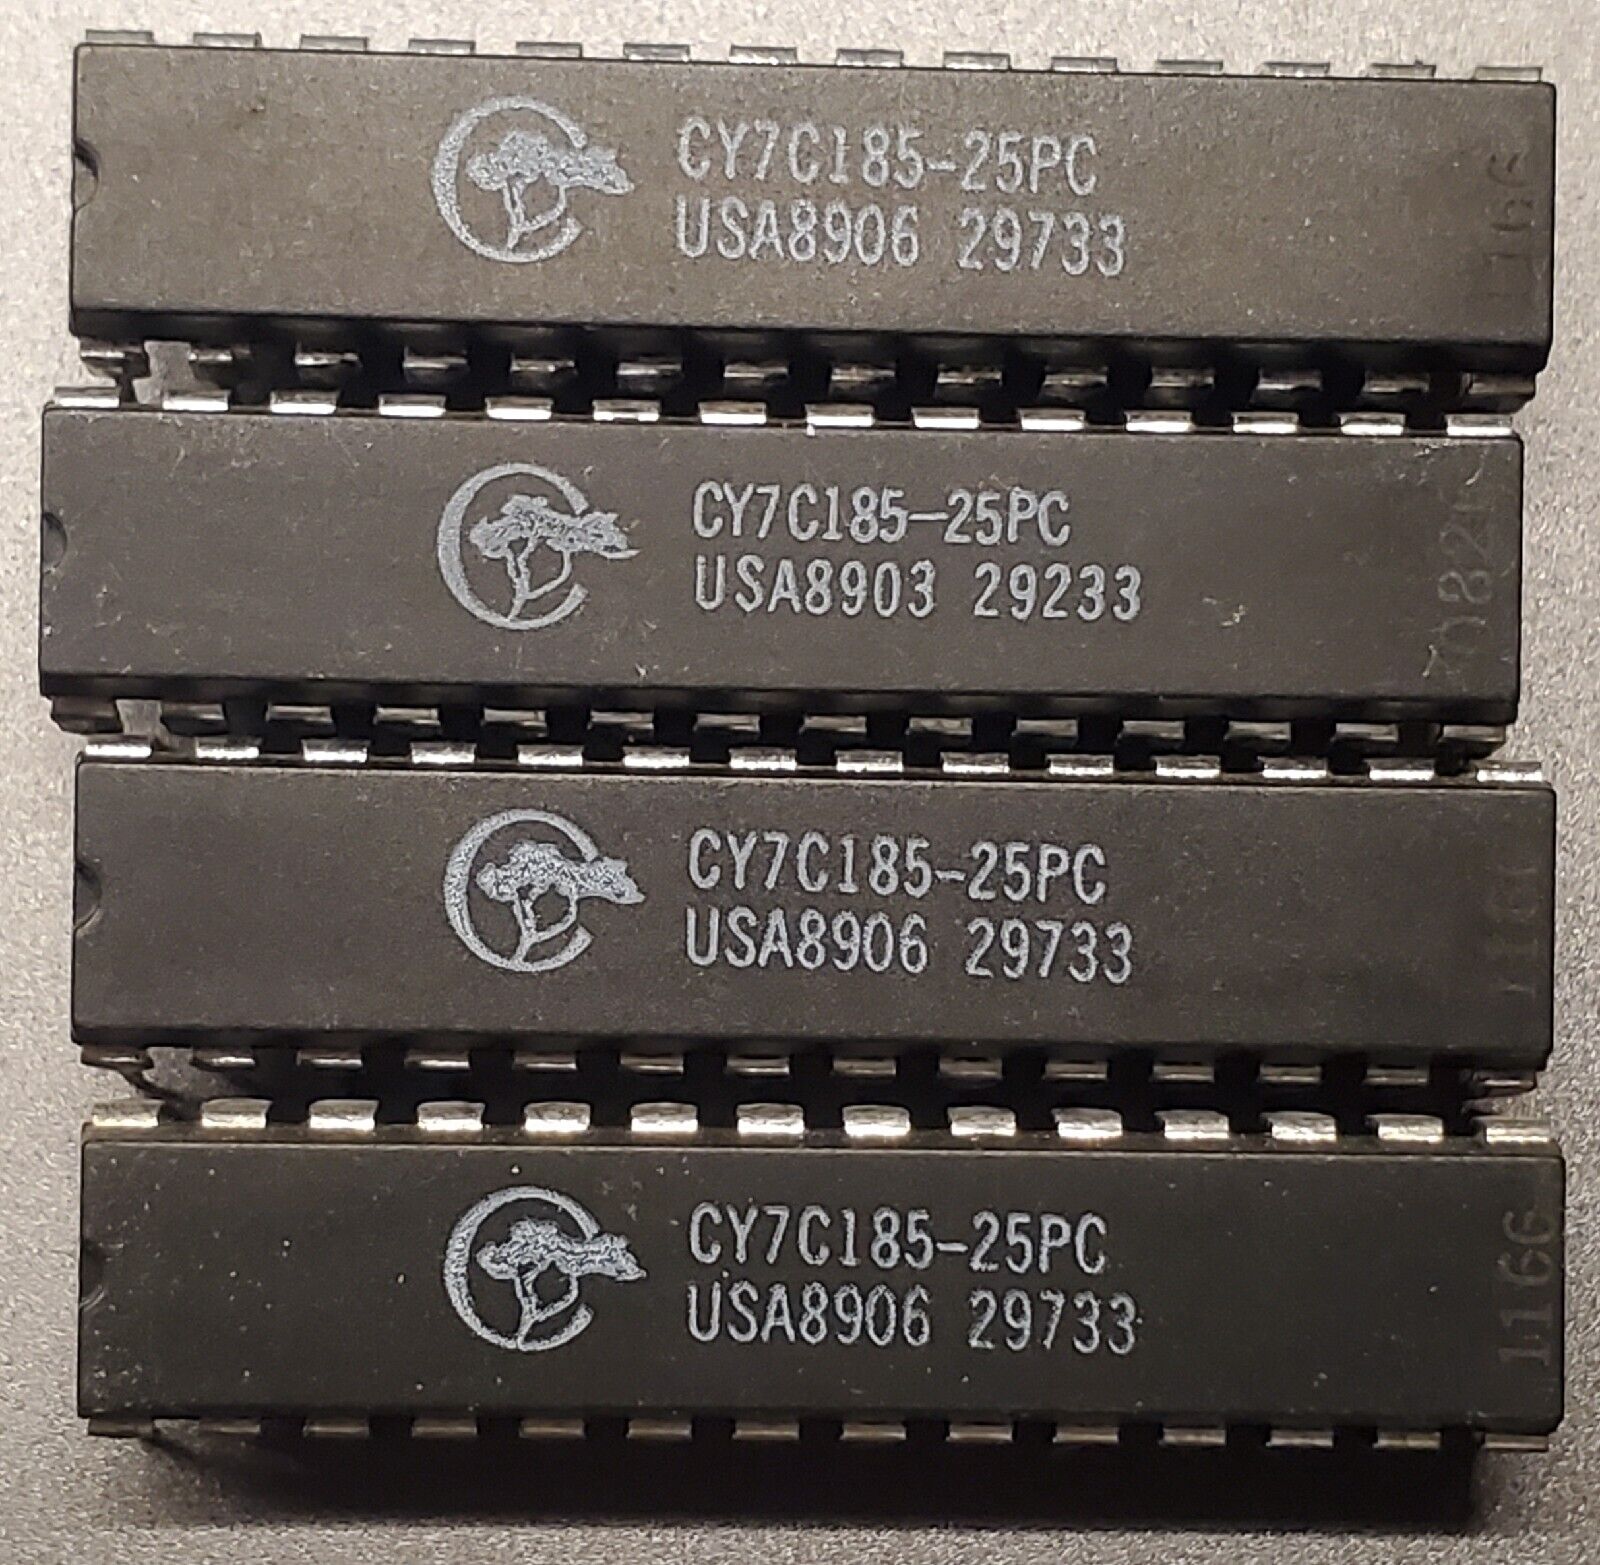 4 PCS - Cypress Semiconductor CY7C185-25PC - 8K x 8 Static RAM - PDIP-28